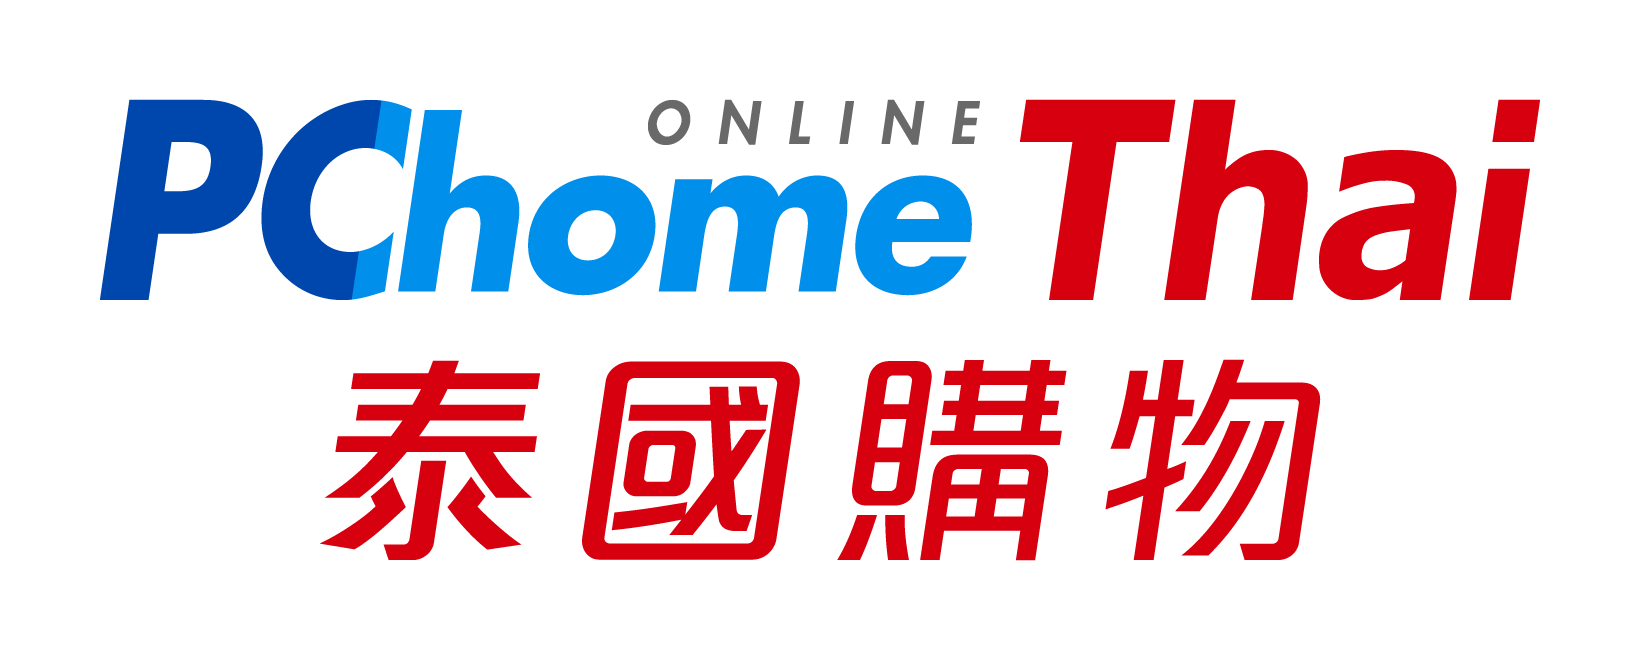 PChomeThai 泰國購物| PChome Online網路家庭/ 電子商務集團